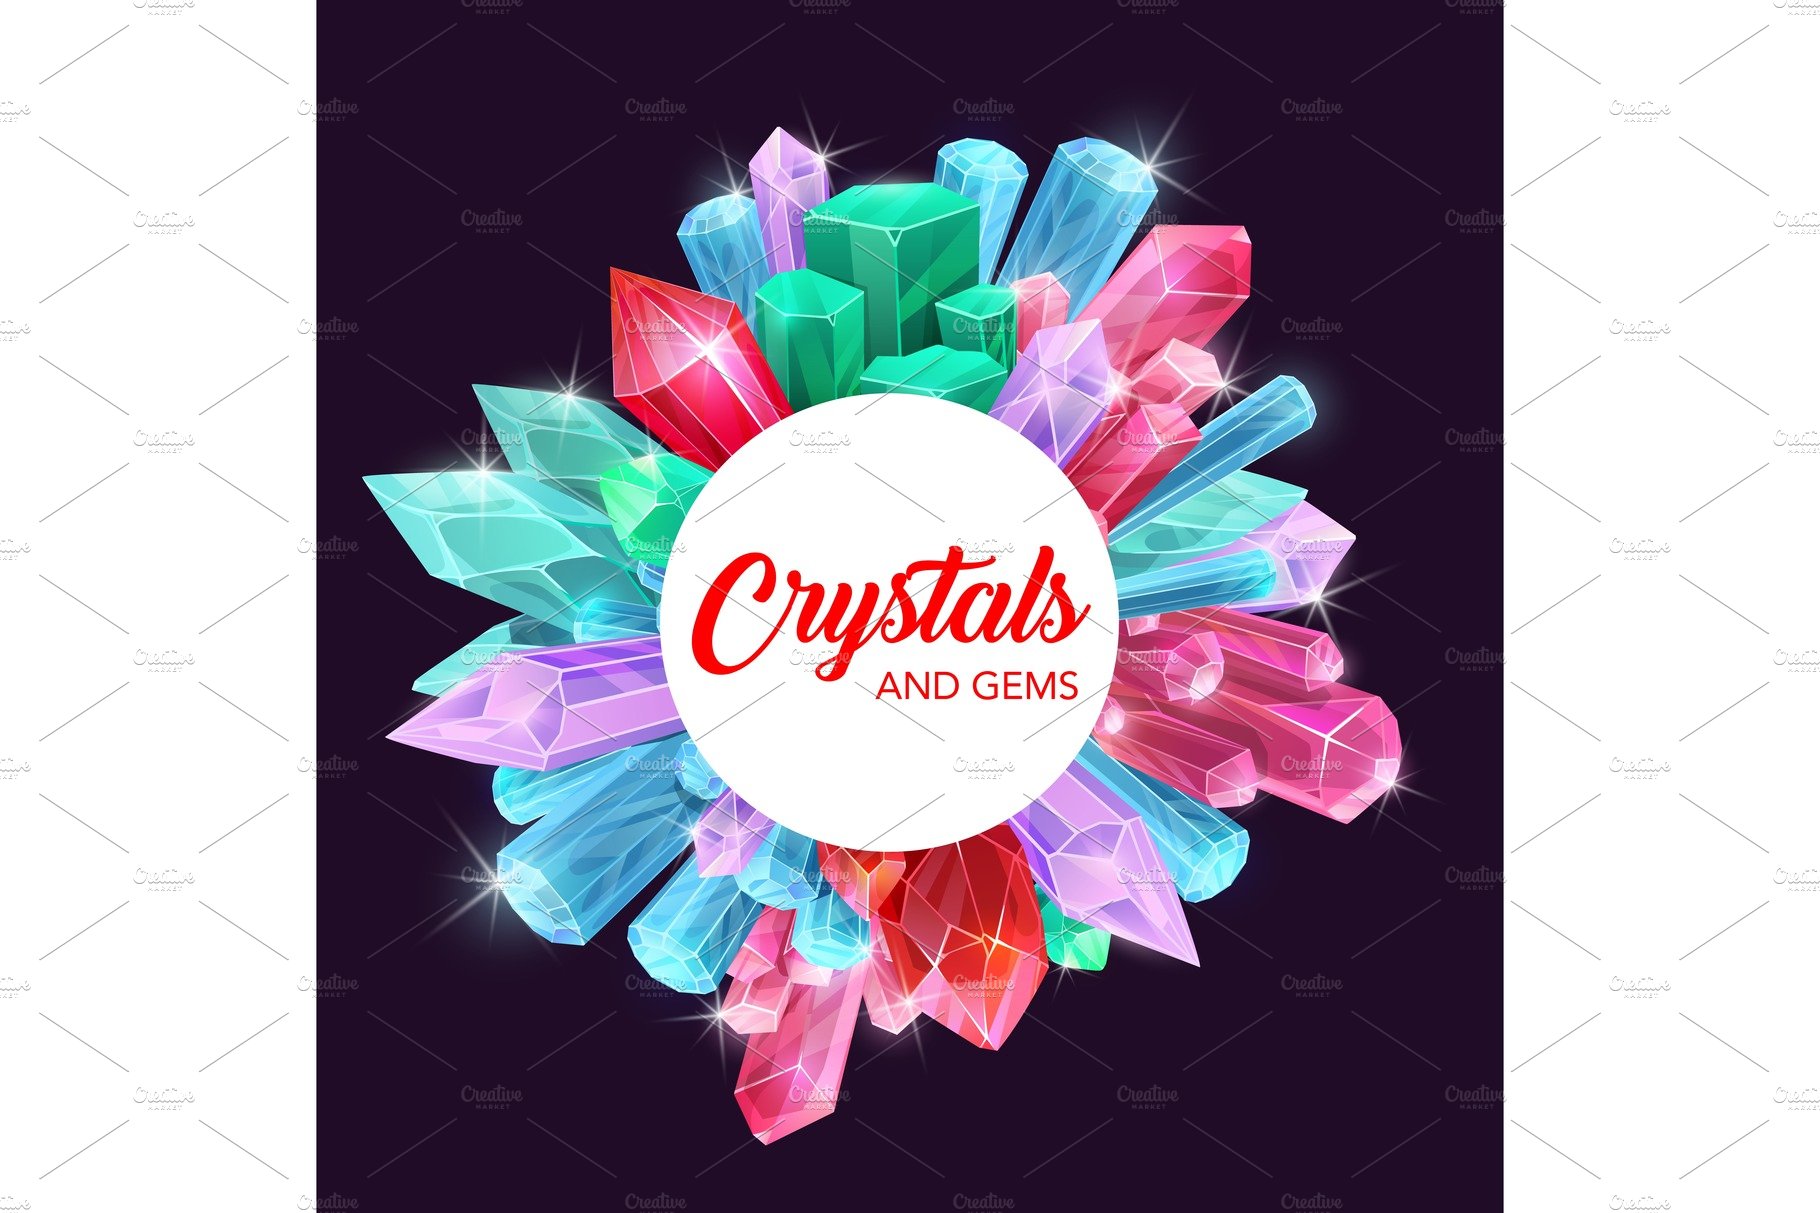 Crystals, gems, quartz, amethyst cover image.